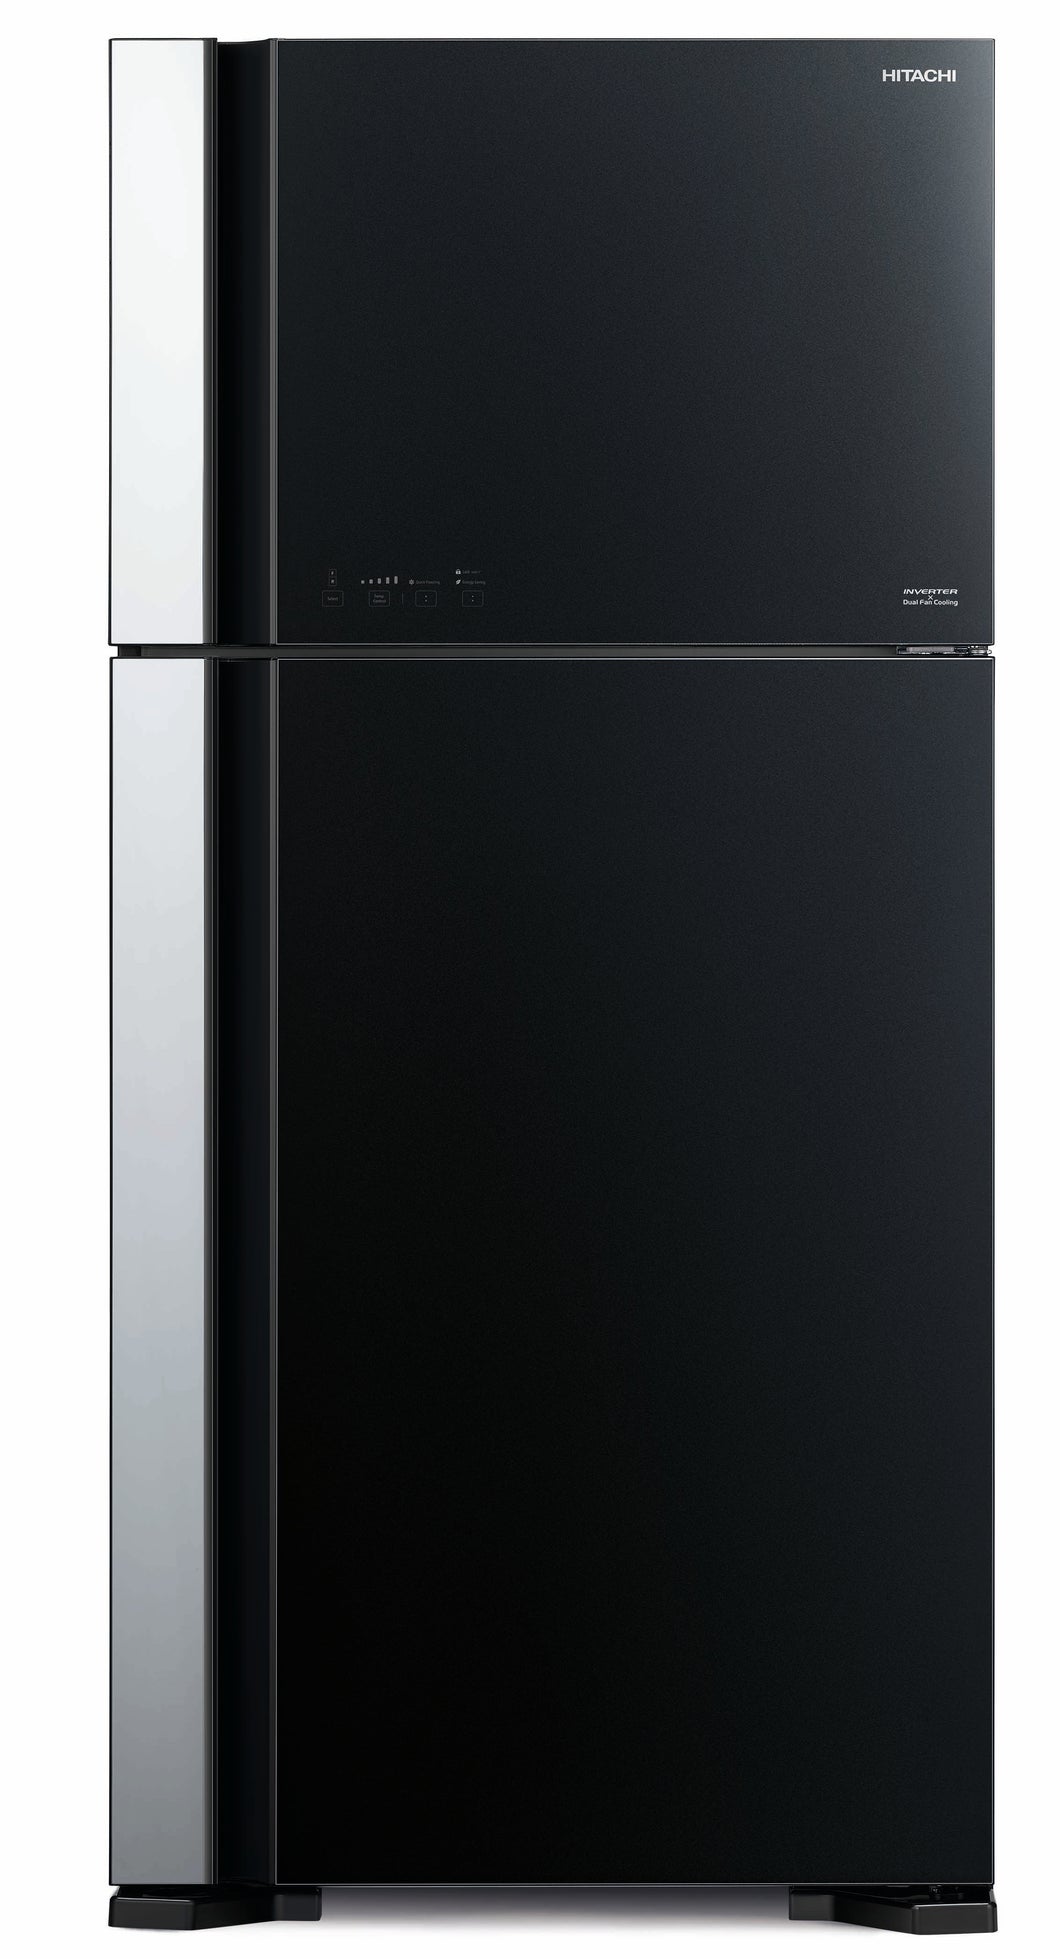 Hitachi Refrigerator R-VG760 (27ft)